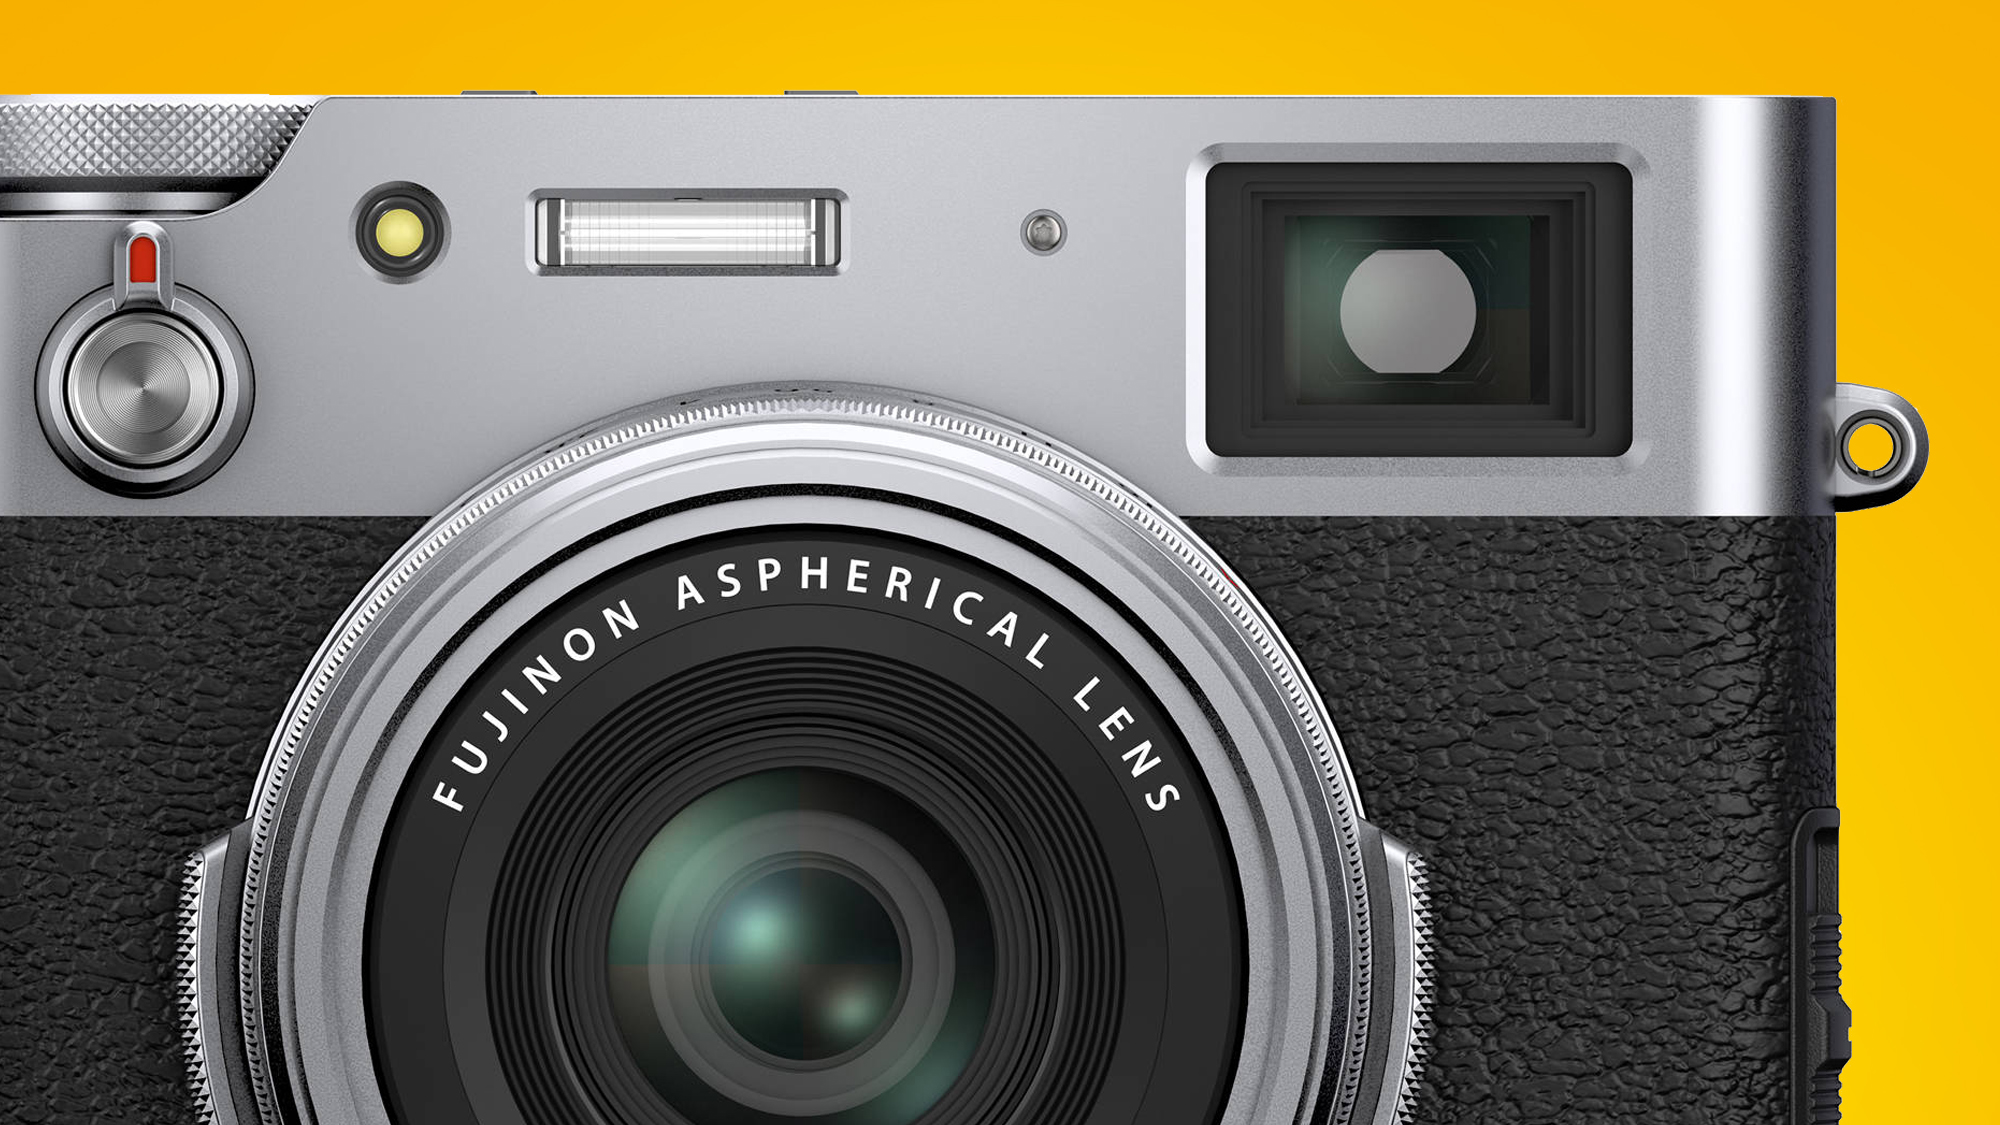 The Fujifilm X100V camera on a yellow background